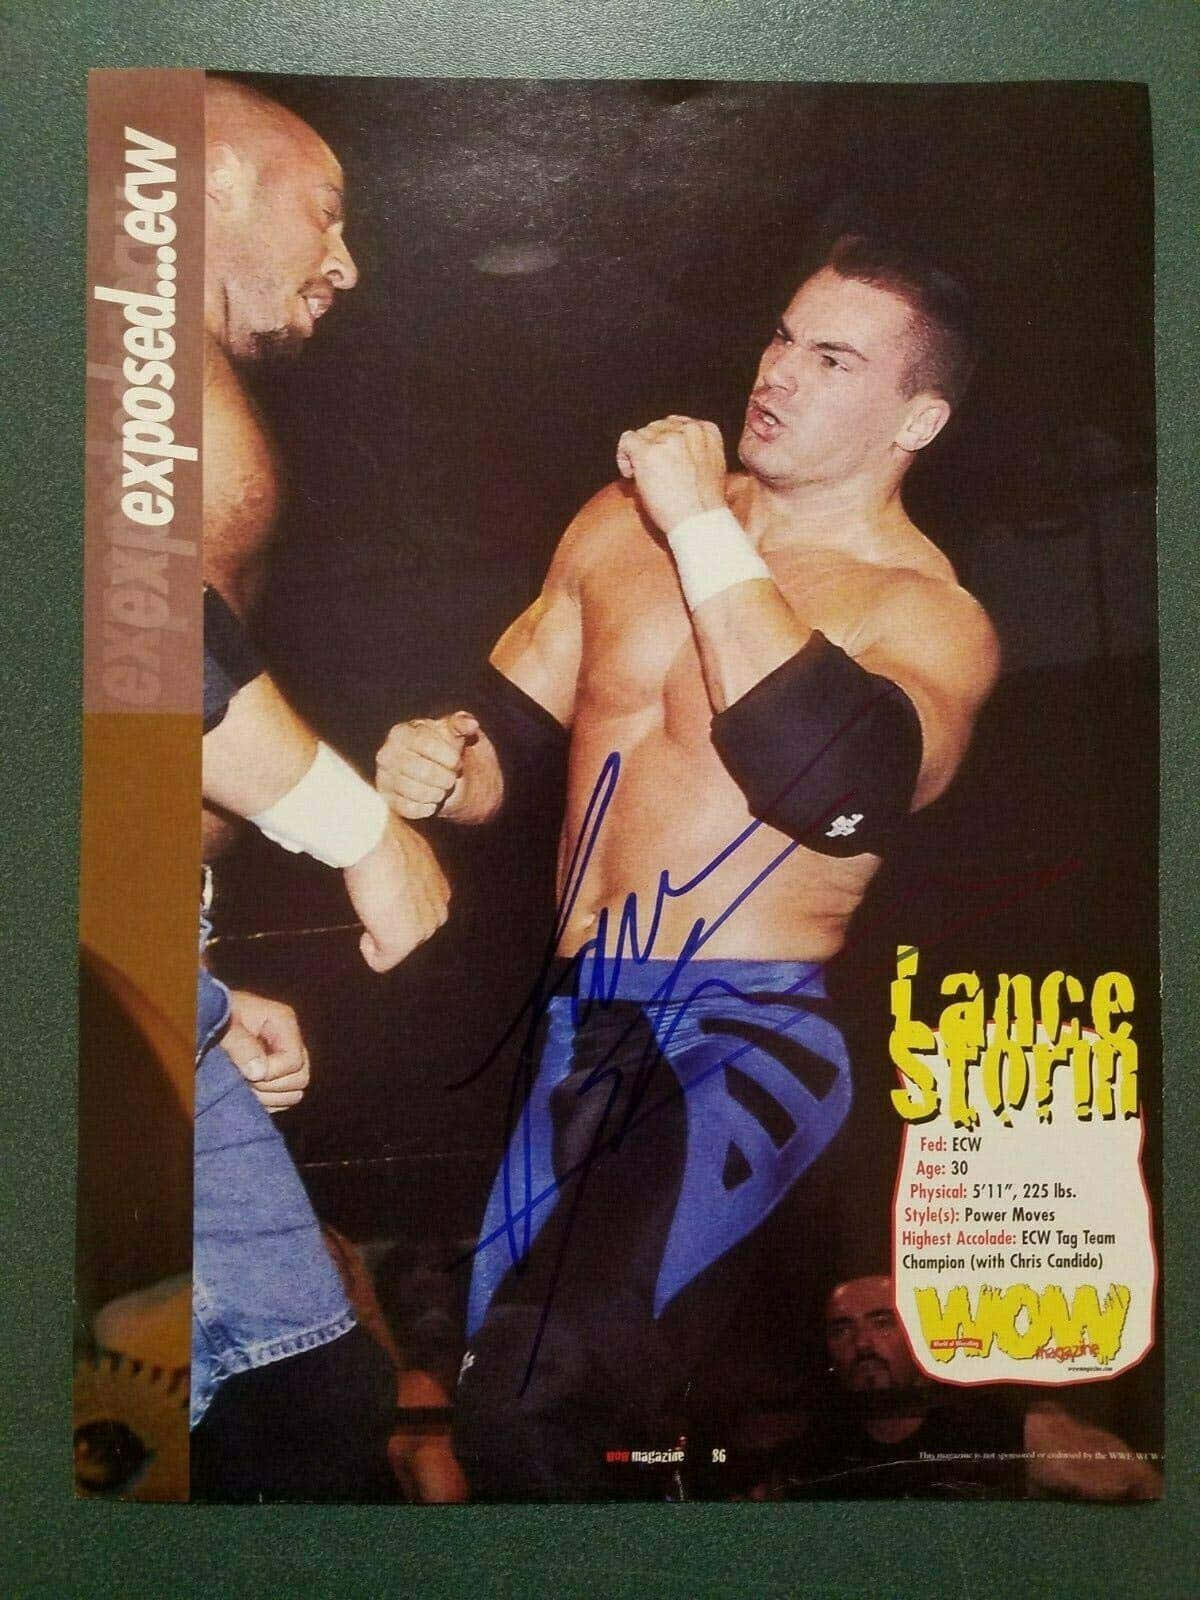 Attraktiverkanadischer Professioneller Wrestler Lance Storm, Fotografiert In Aktion Wallpaper